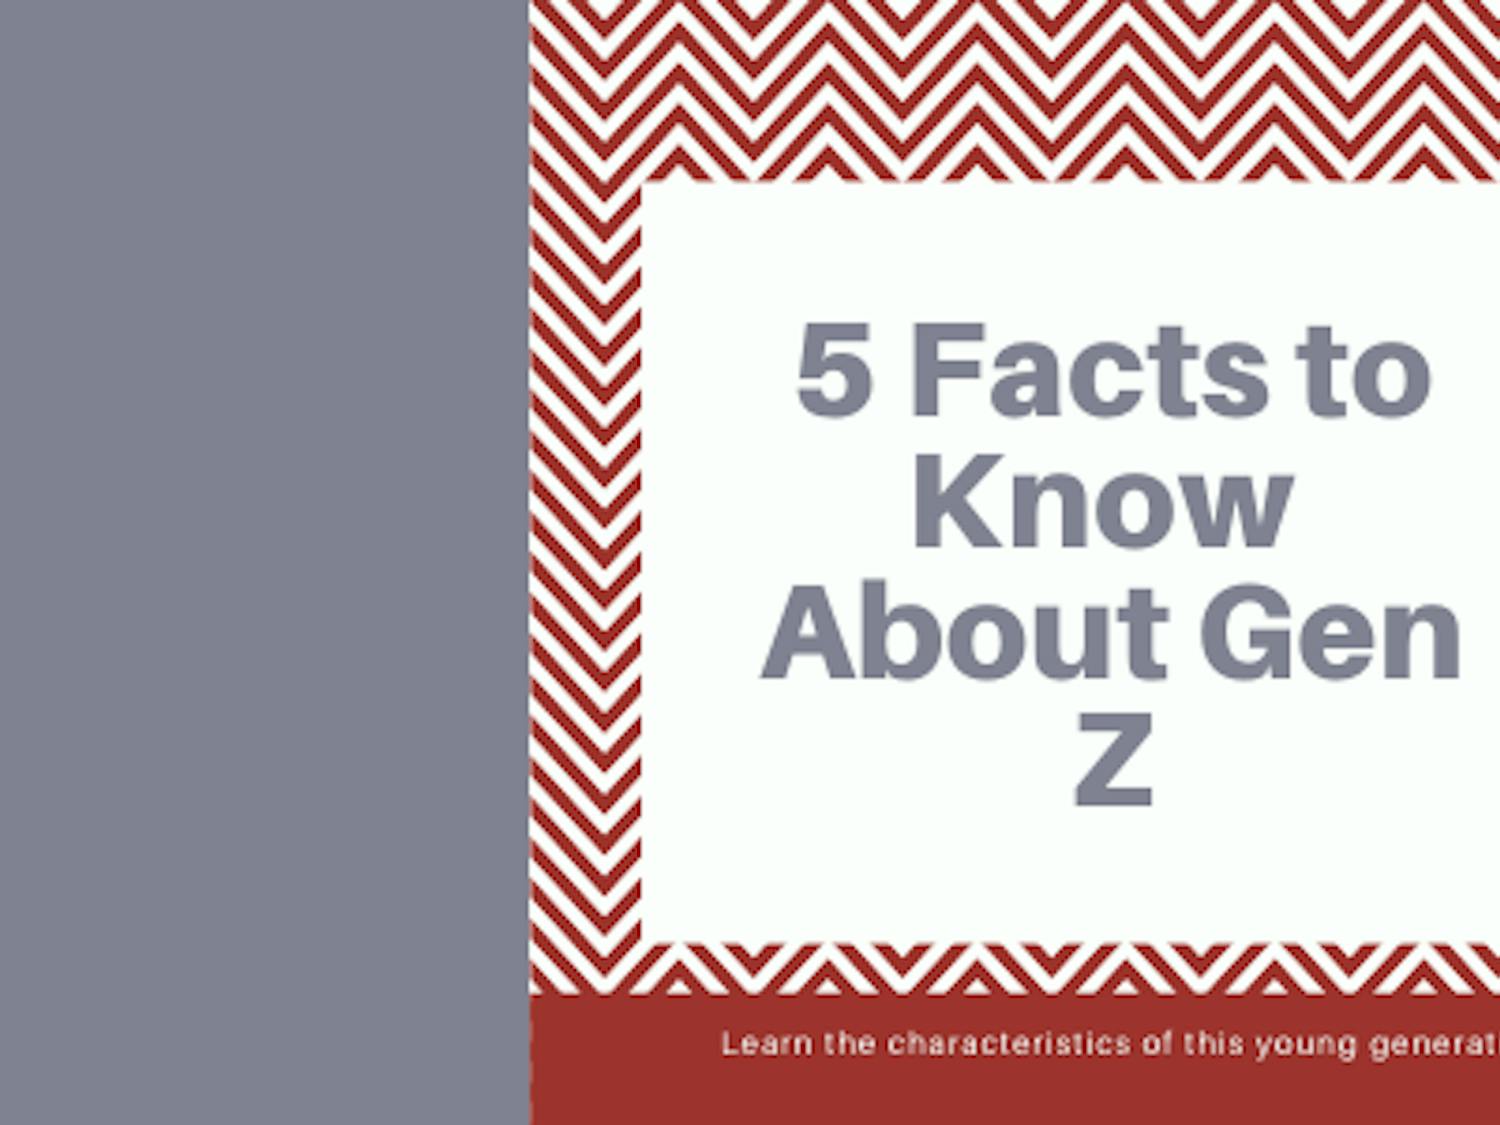 5 Gen Z Facts Header.png